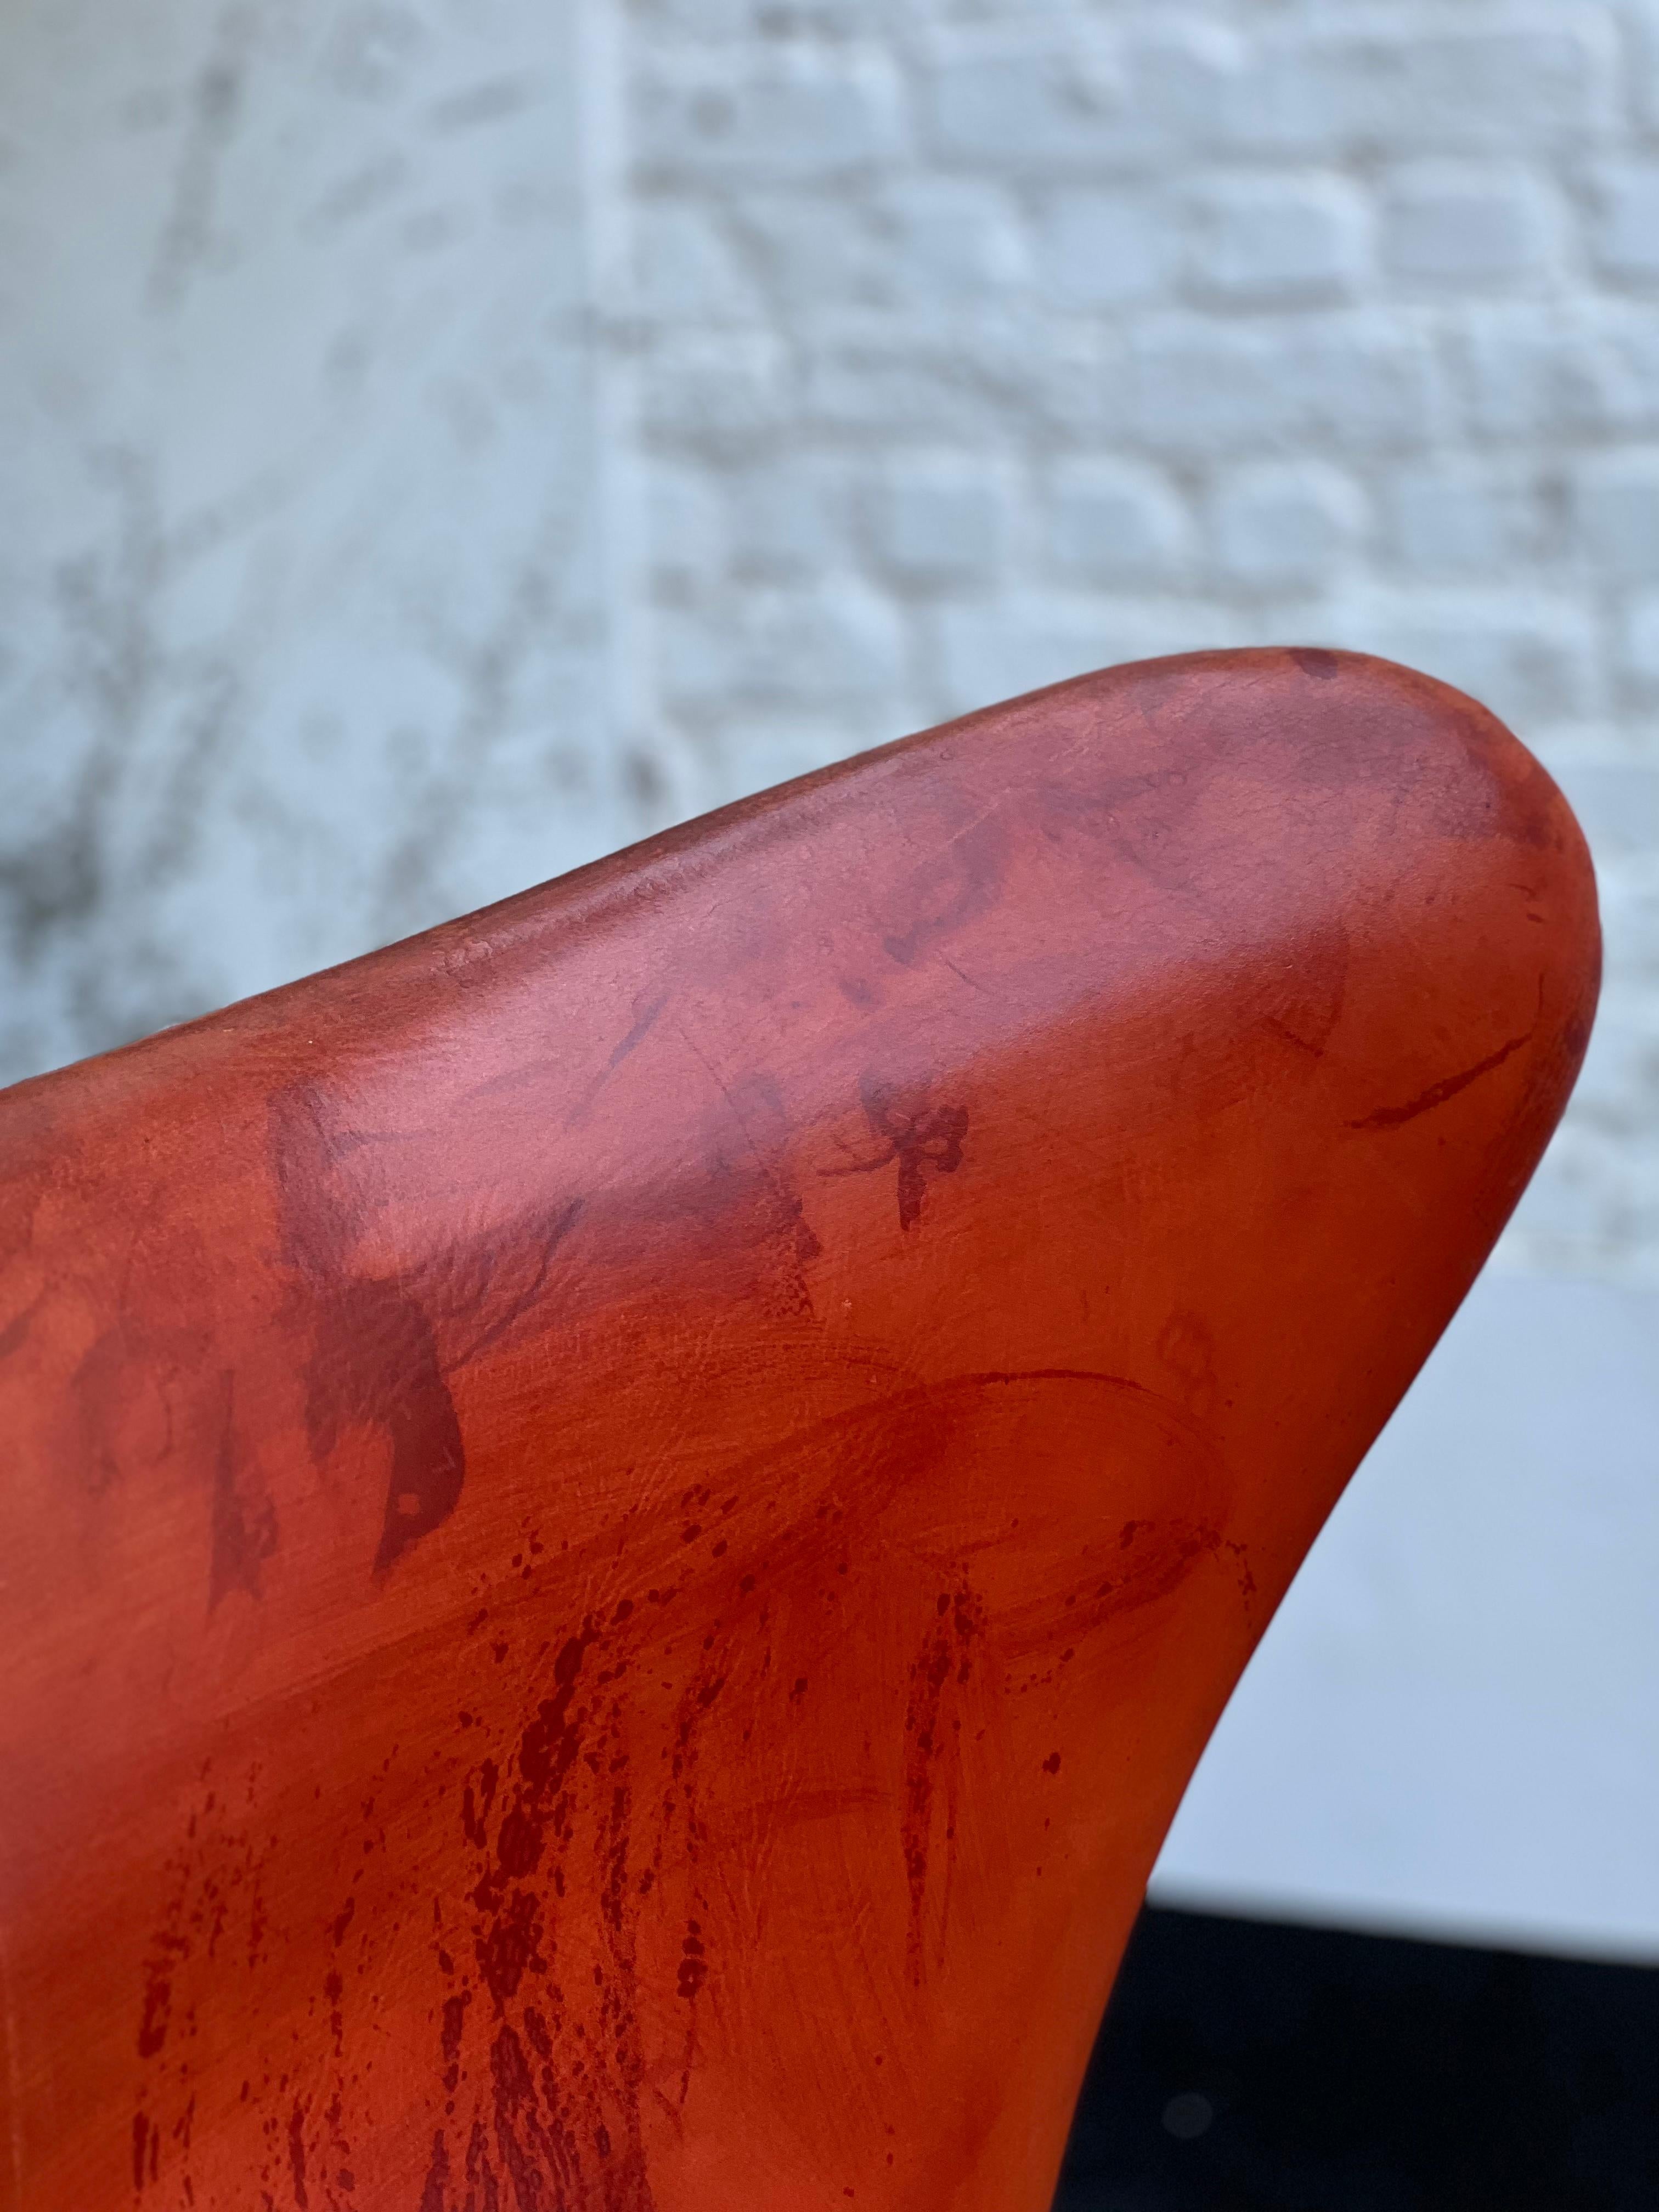 Aluminum Arne Jacobsen Iconic Egg Chair Cognac Leather Early 60s Original Fritz Hansen For Sale